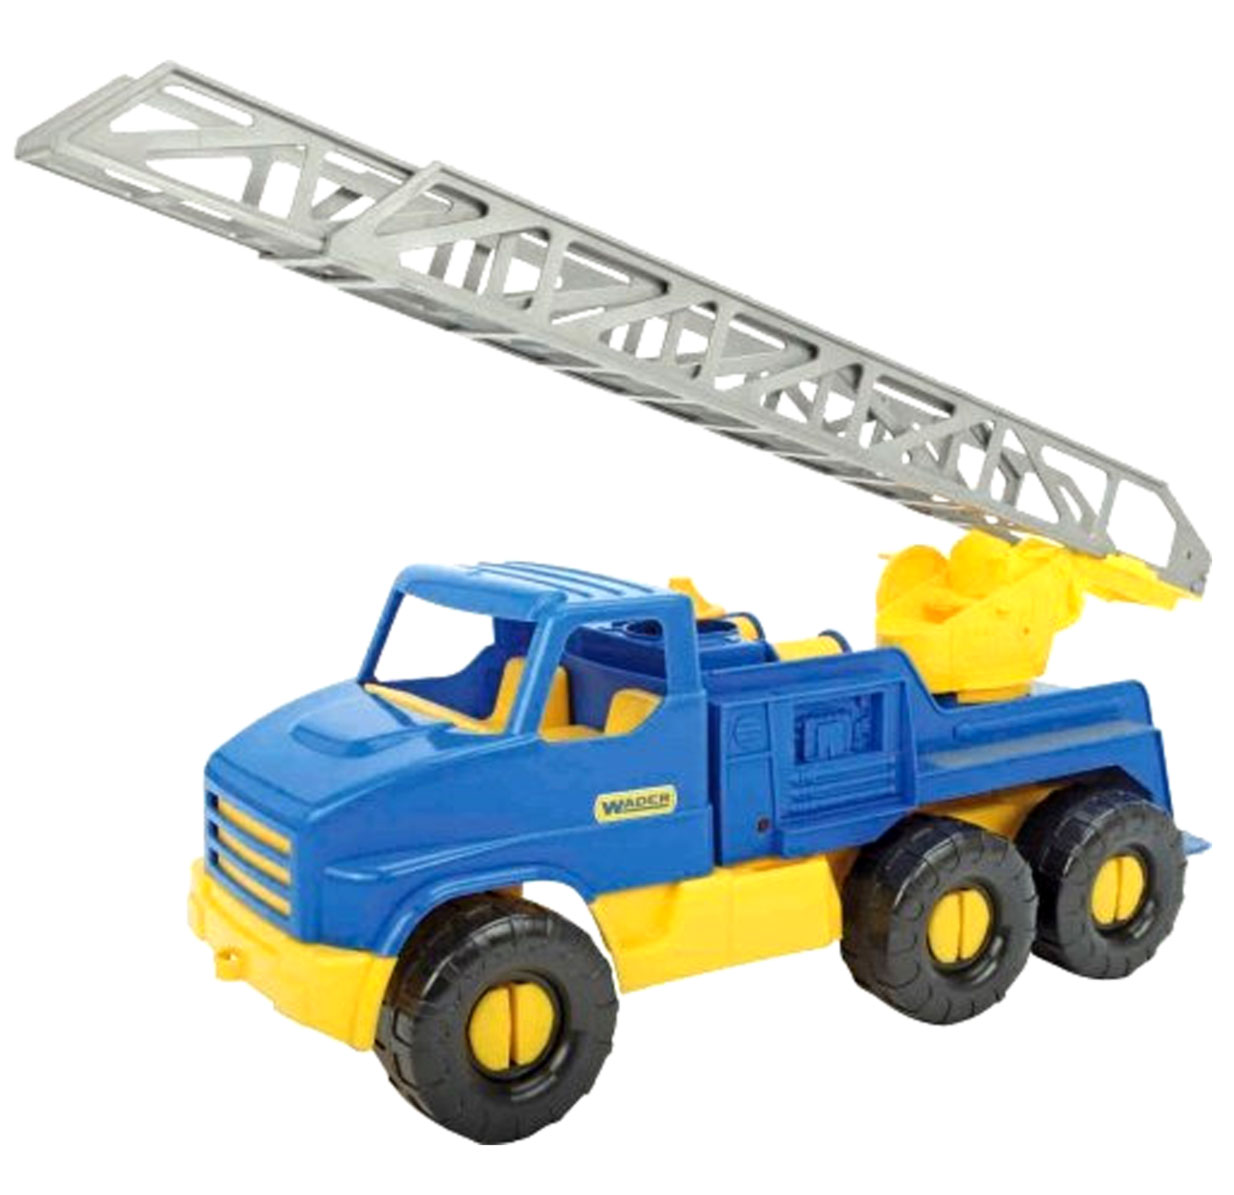 Іграшкове авто 'City truck' пожежна машина